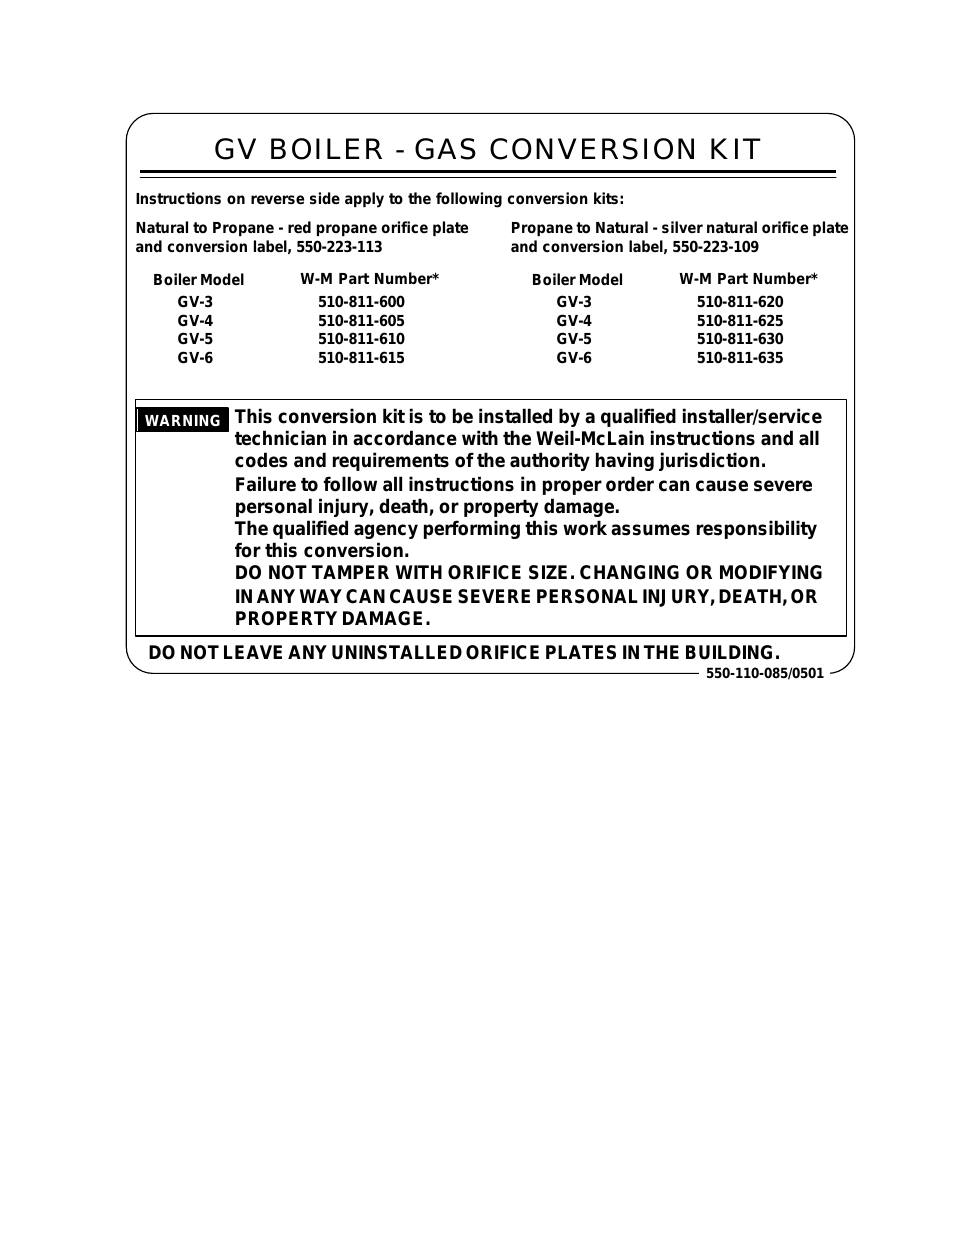 GAS CONVERSION KIT GV-4 510-811-605